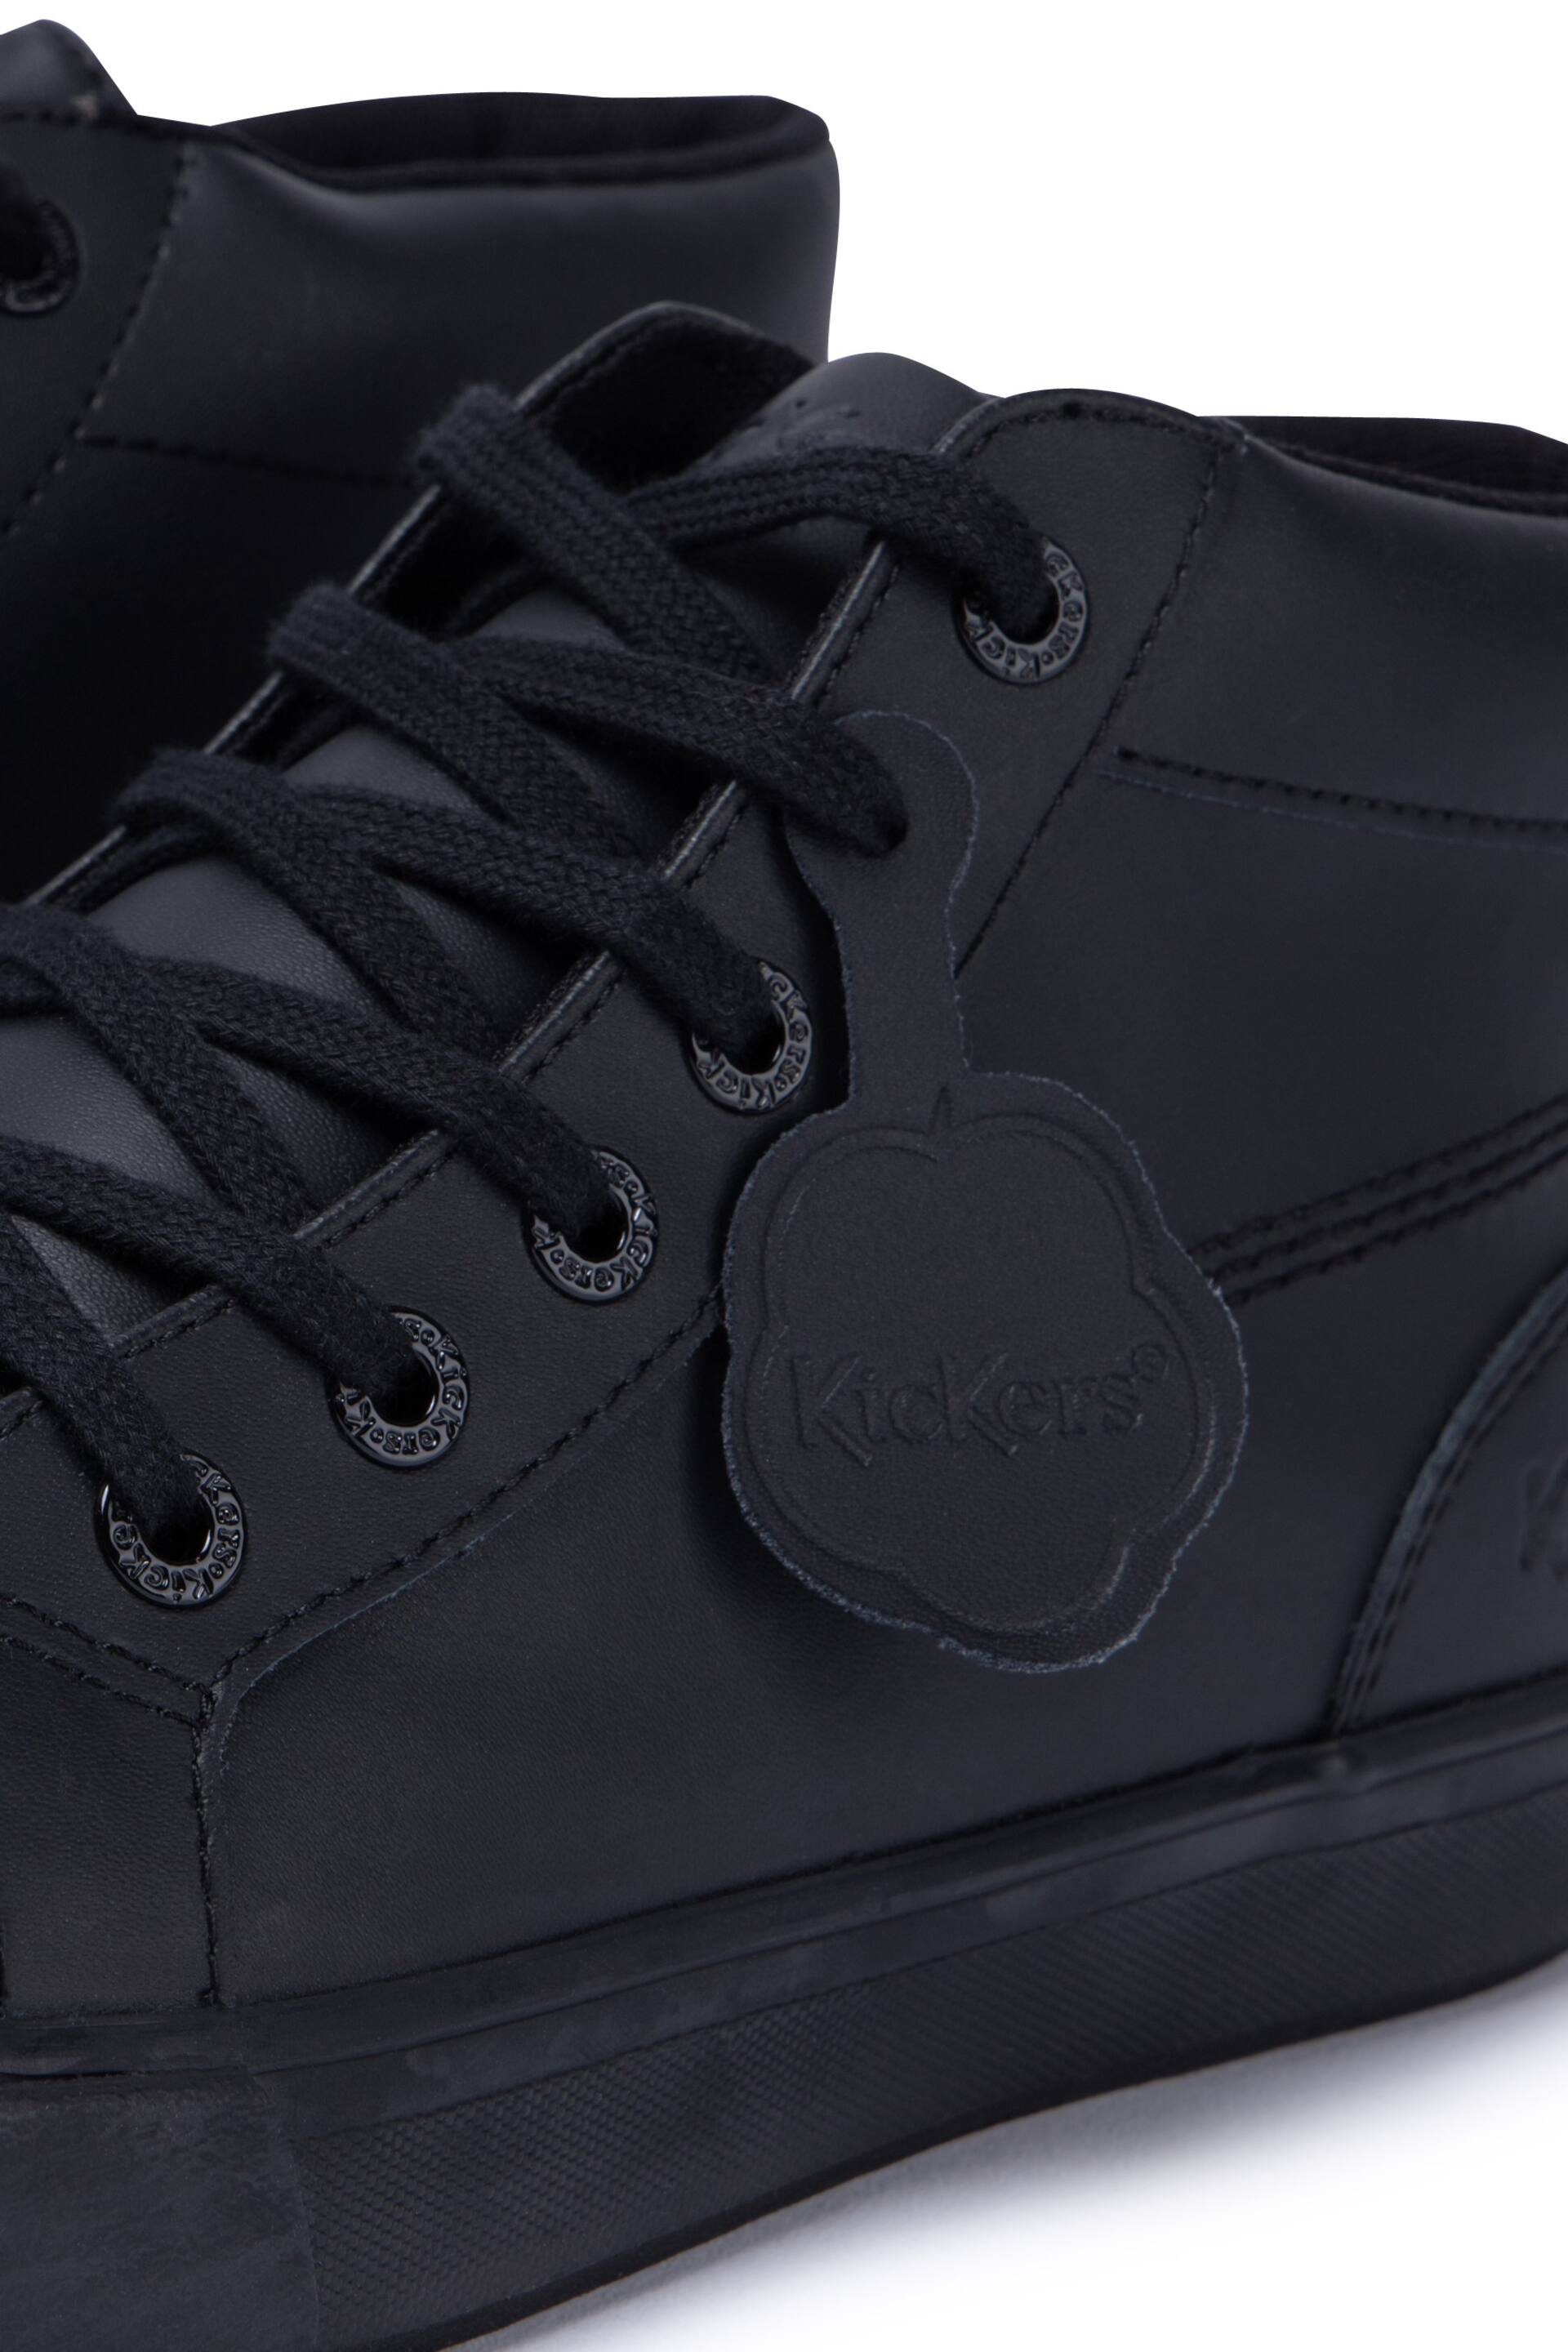 Kickers Black Tovni Hi Leather Shoes - Image 6 of 6